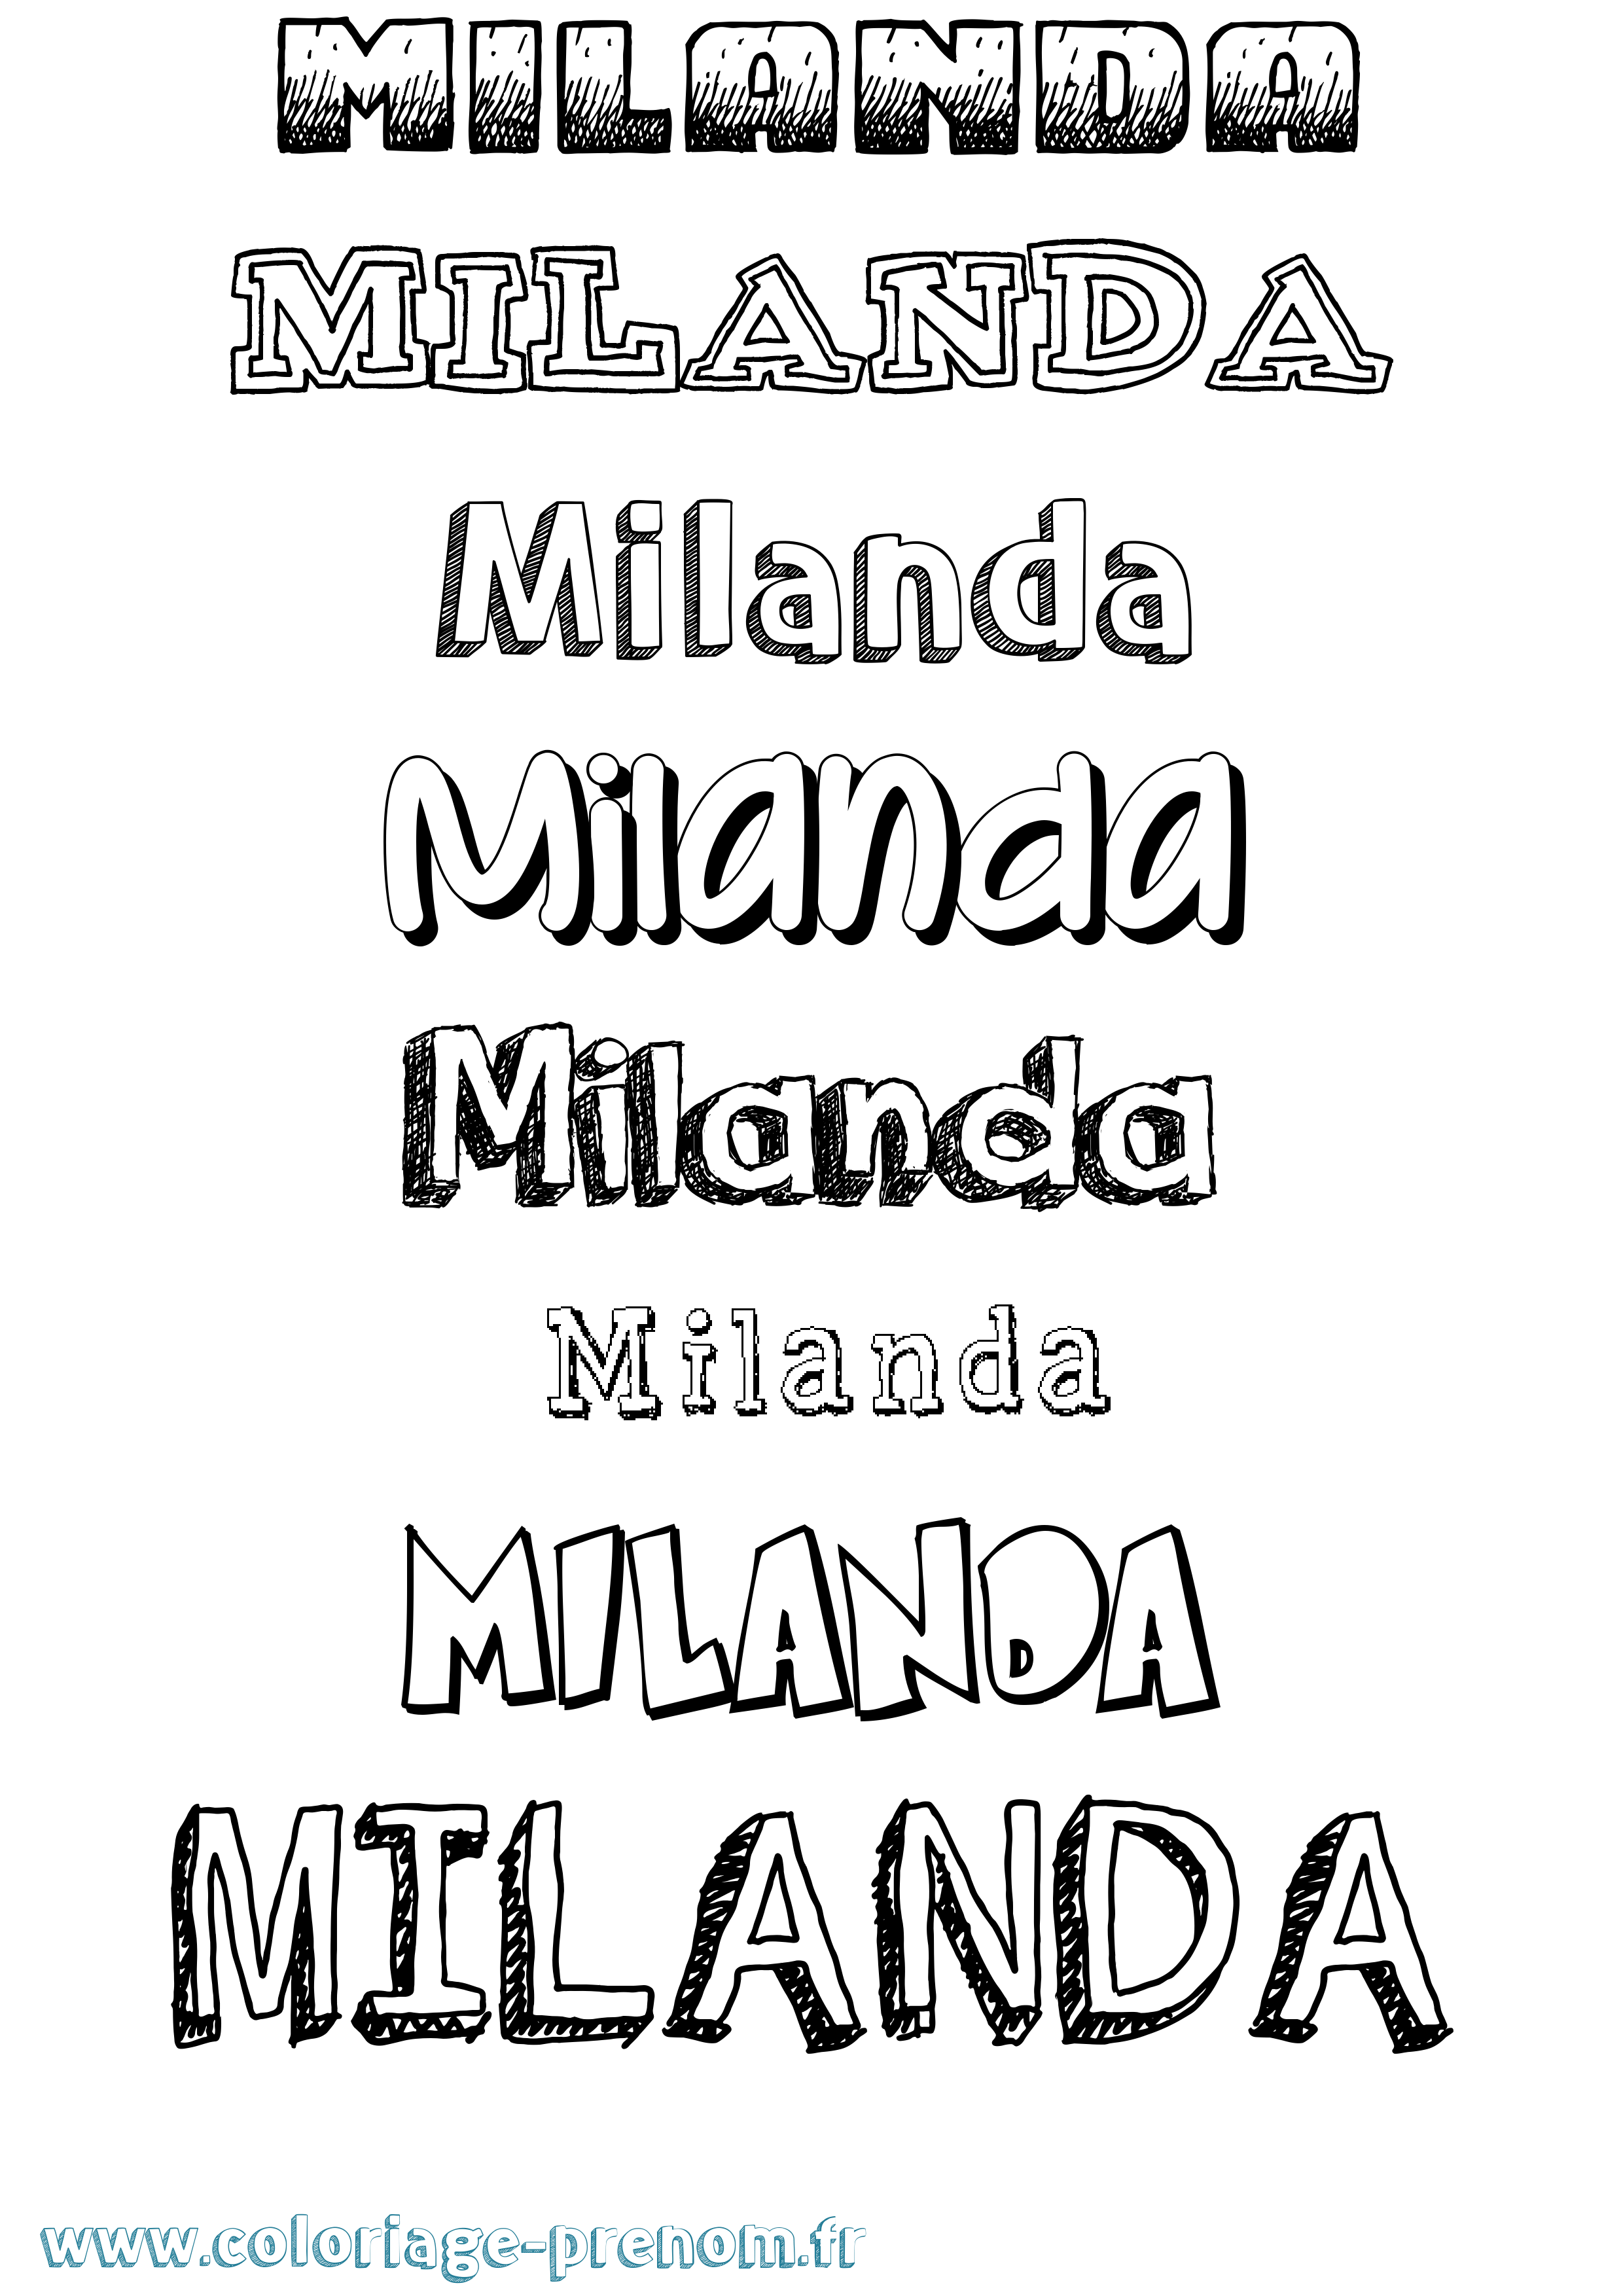 Coloriage prénom Milanda Dessiné